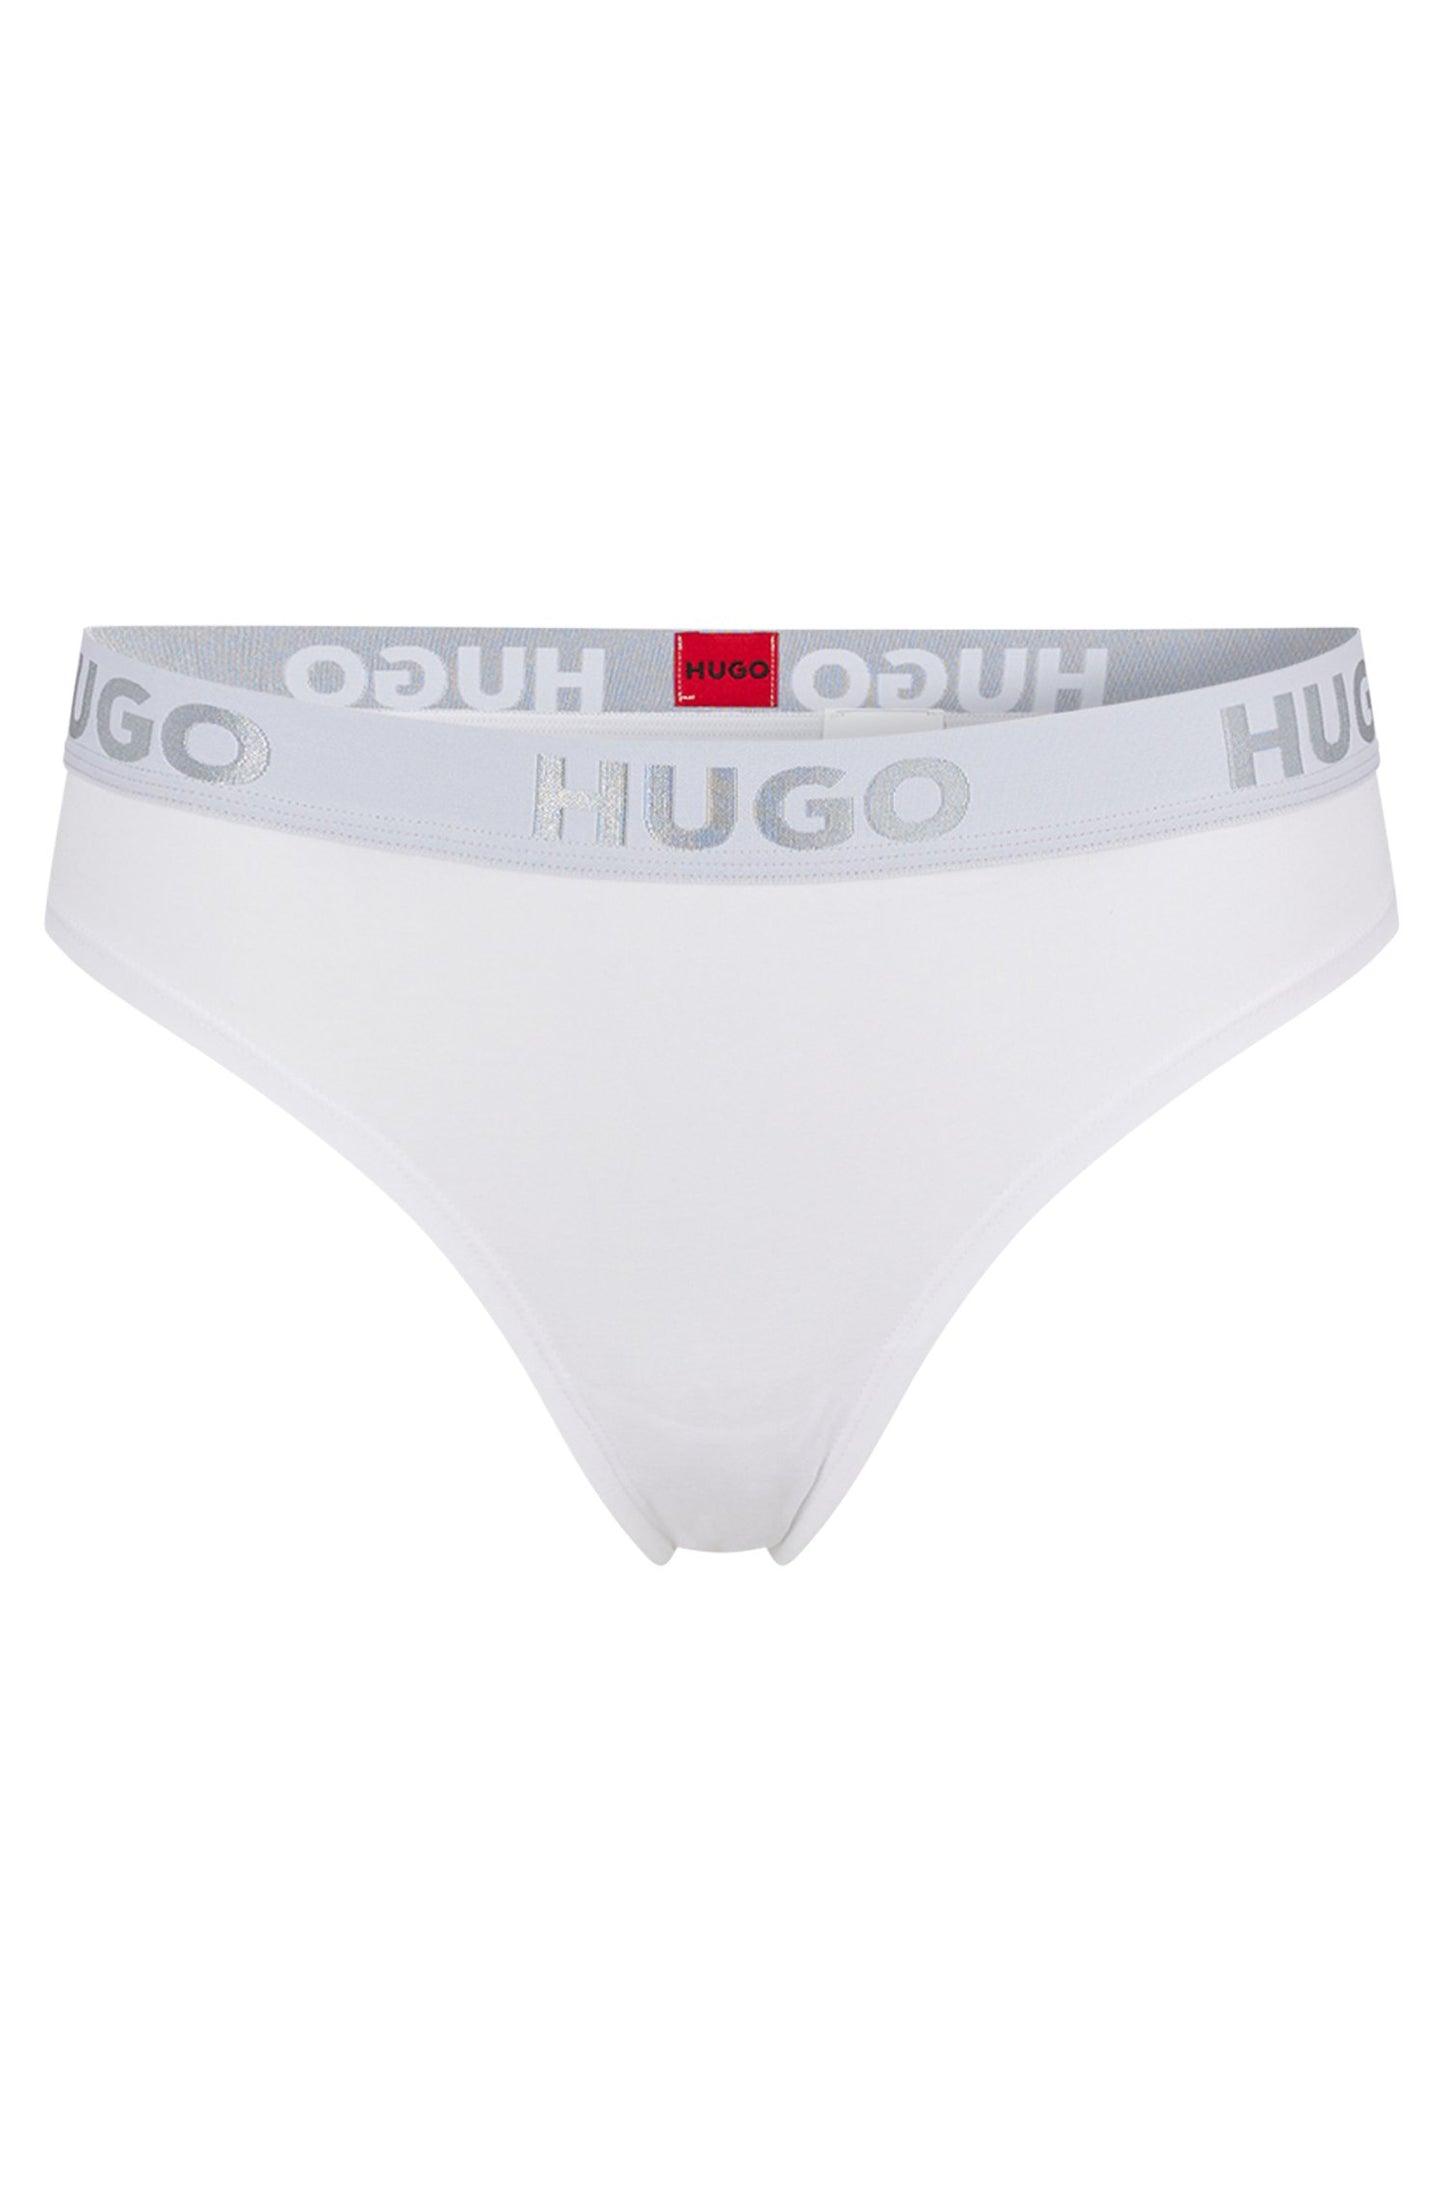 Culotte Thong Hugo Boss de couleur Blanc